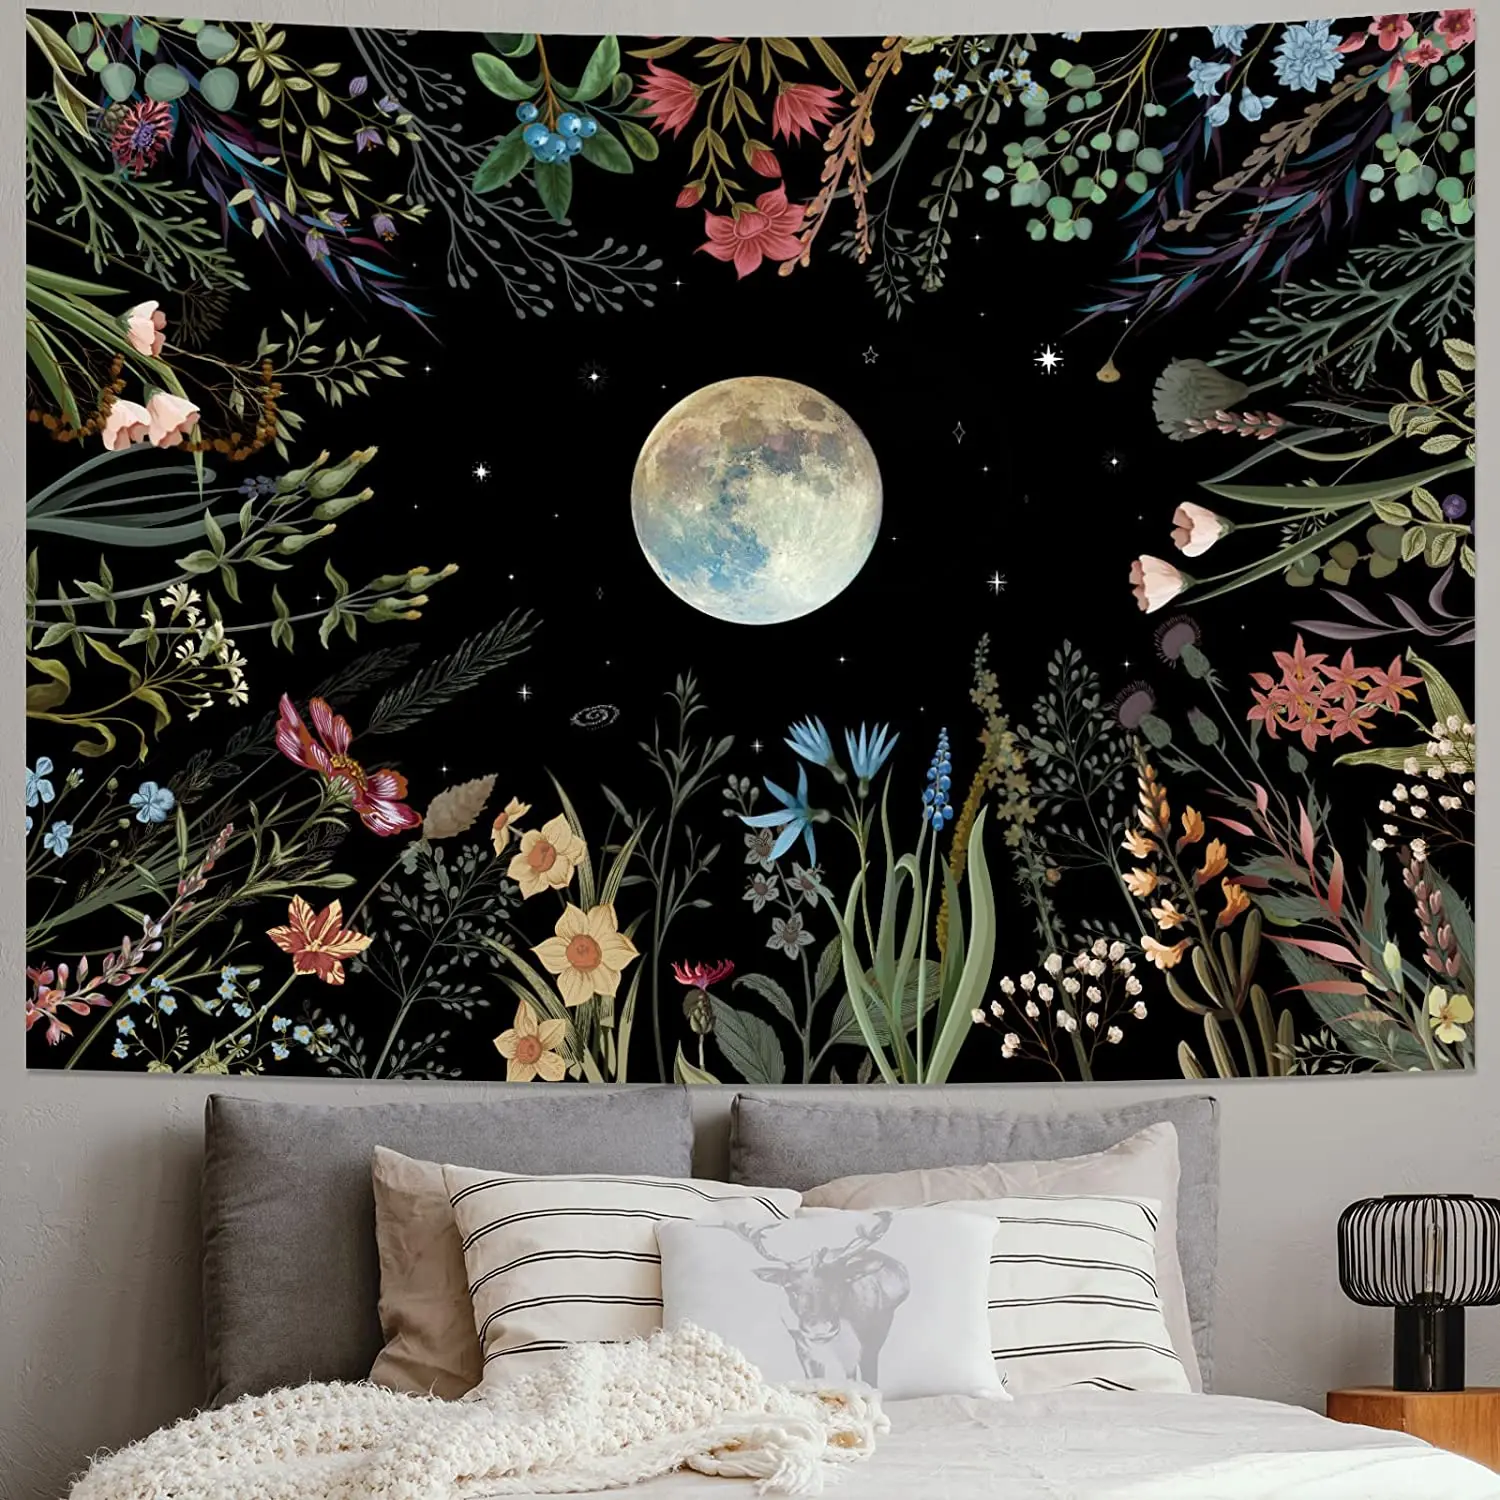 

Moonlit Garden Tapestry Moon Wall Hanging Flowers Bedroom Aesthetic Art Decoration Floral Plants Home Room Decor Poster Tapiz